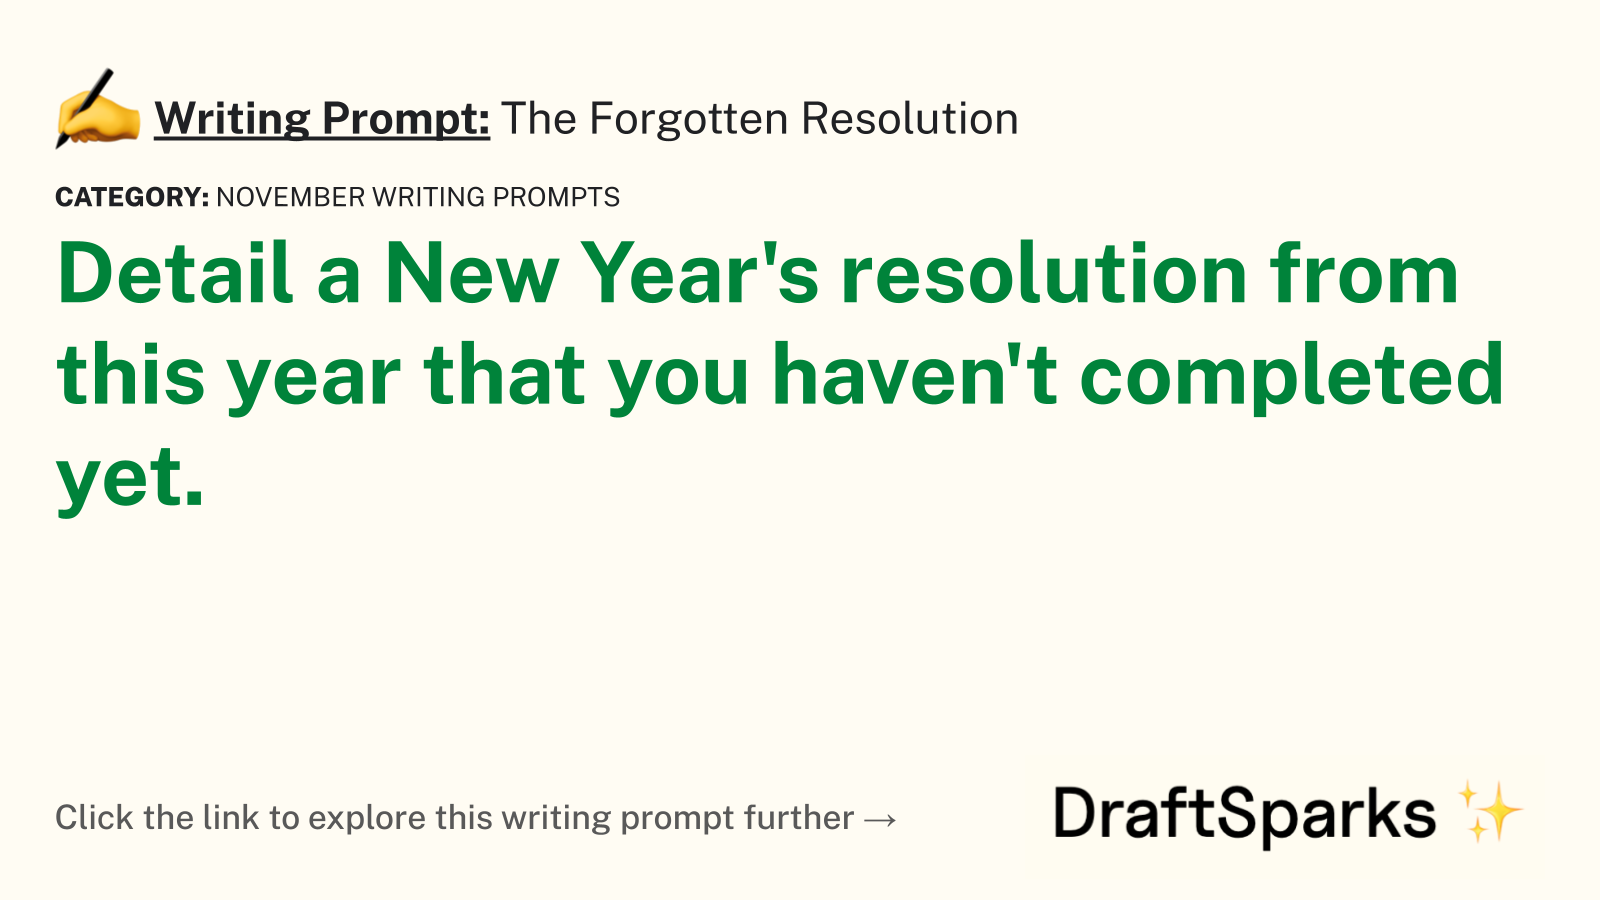 The Forgotten Resolution